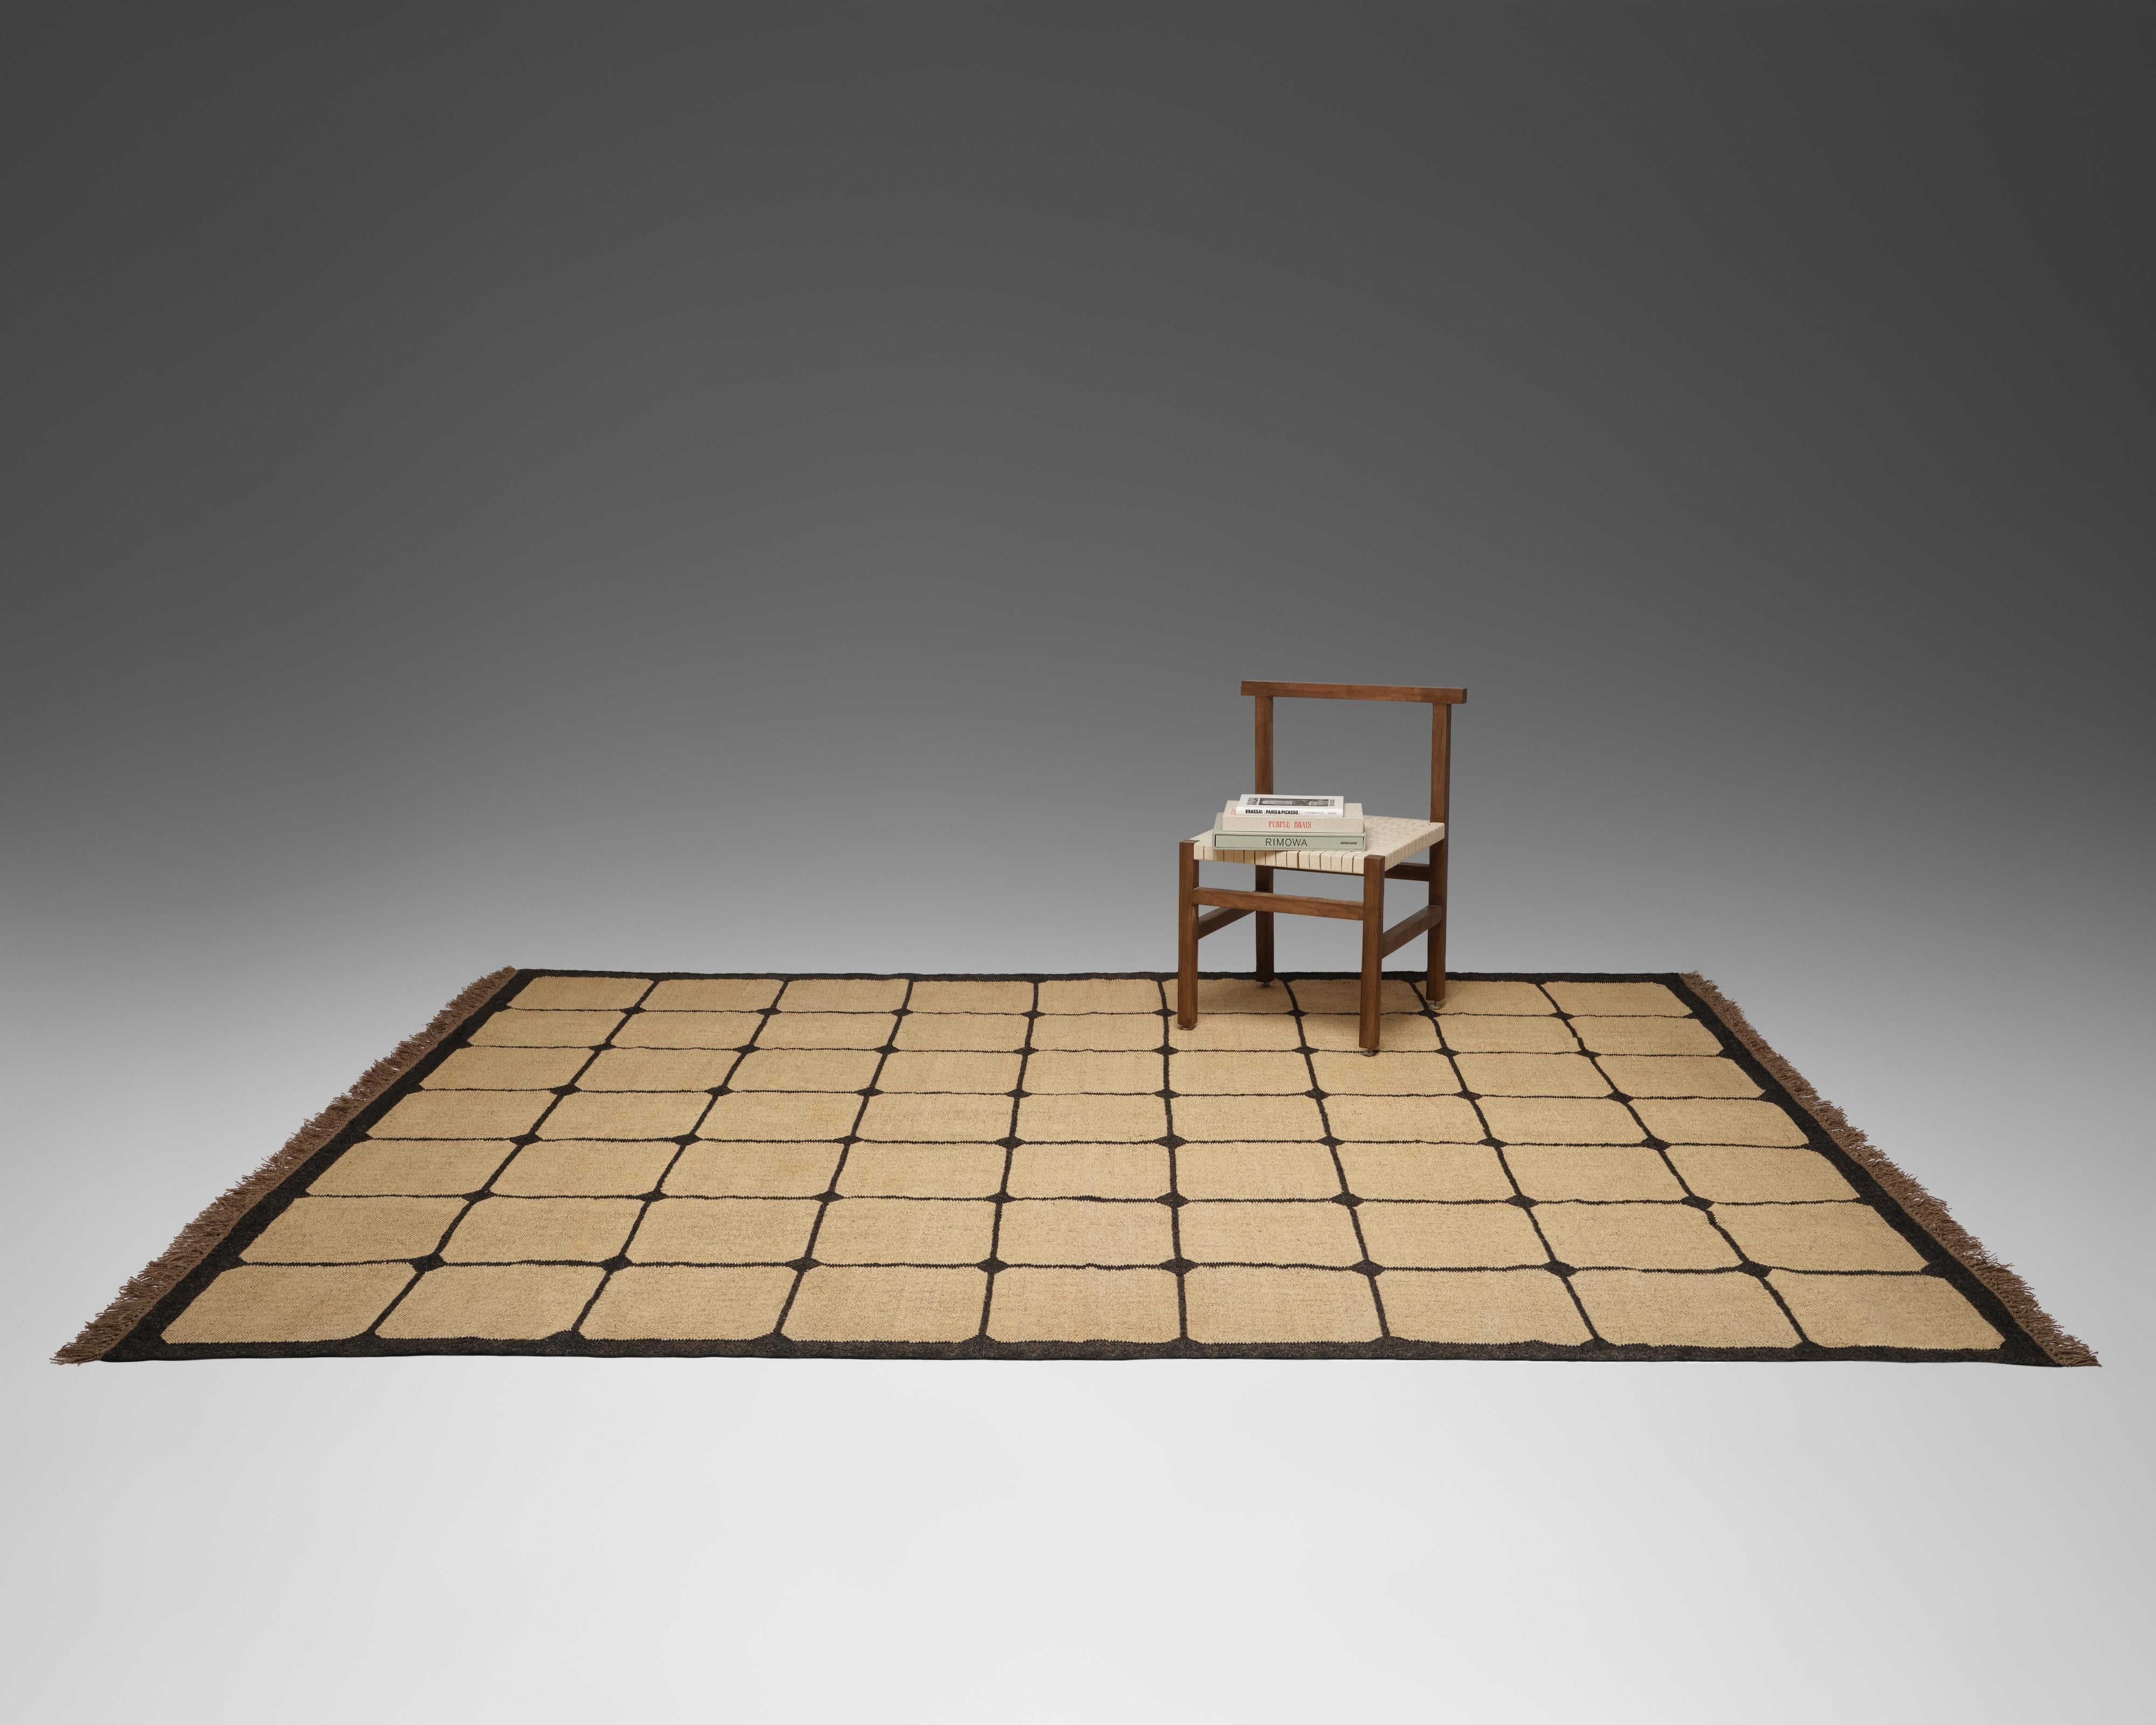 checkerboard rug 8x10